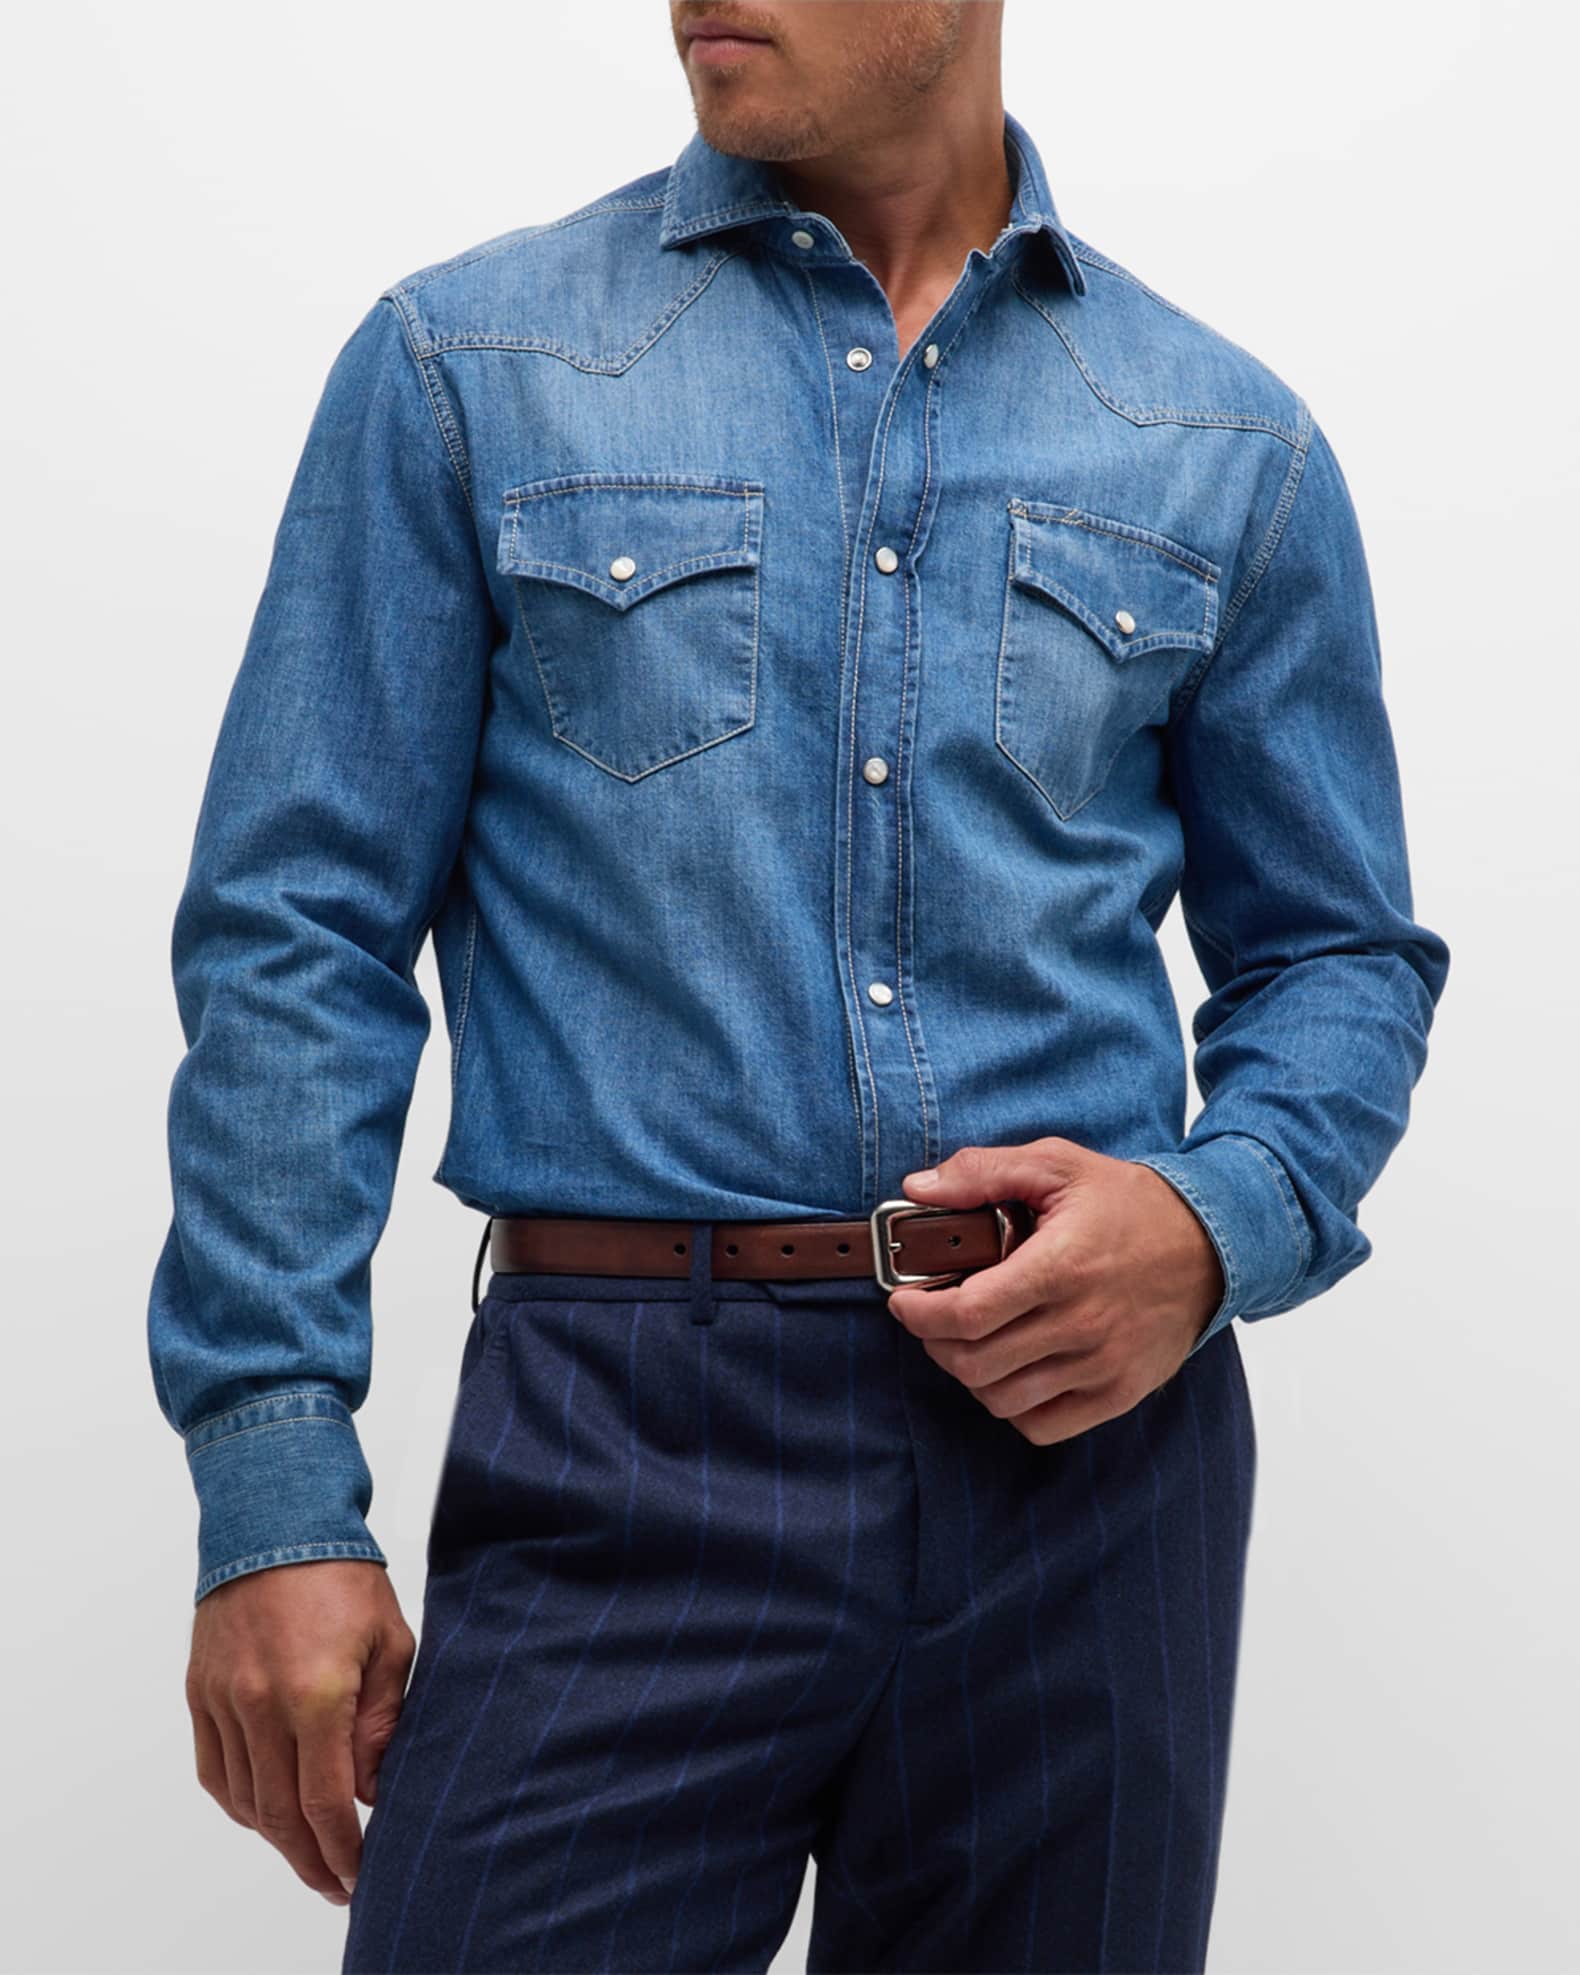 Ralph Lauren Girl's Cotton Denim Western Shirt - Size 7 in Blue